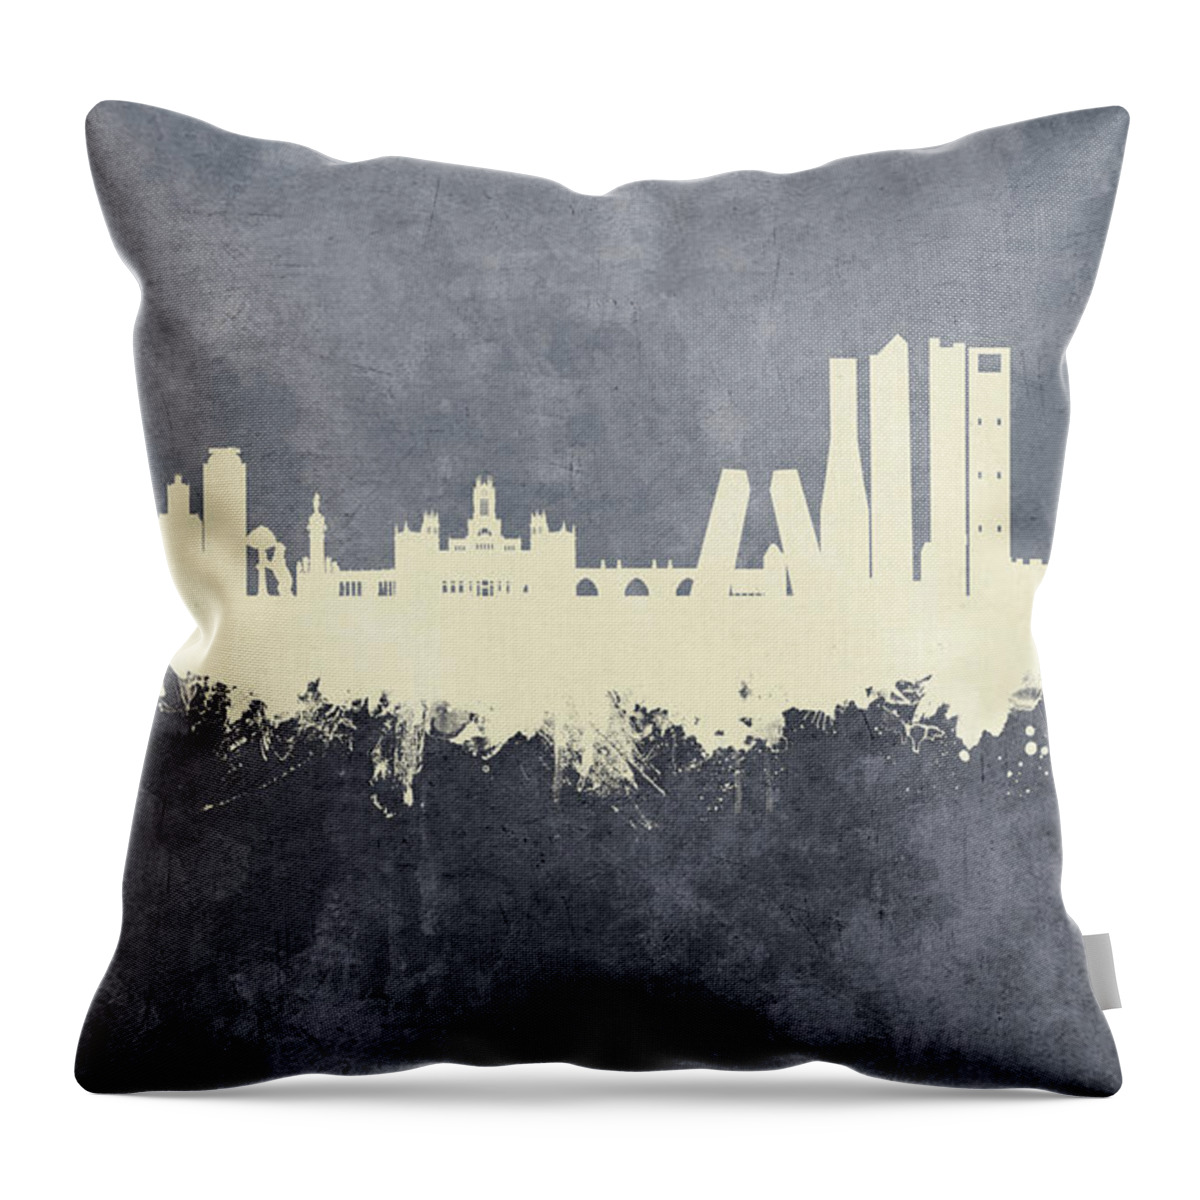 Madrid Throw Pillow featuring the digital art Madrid Spain Skyline #60 by Michael Tompsett